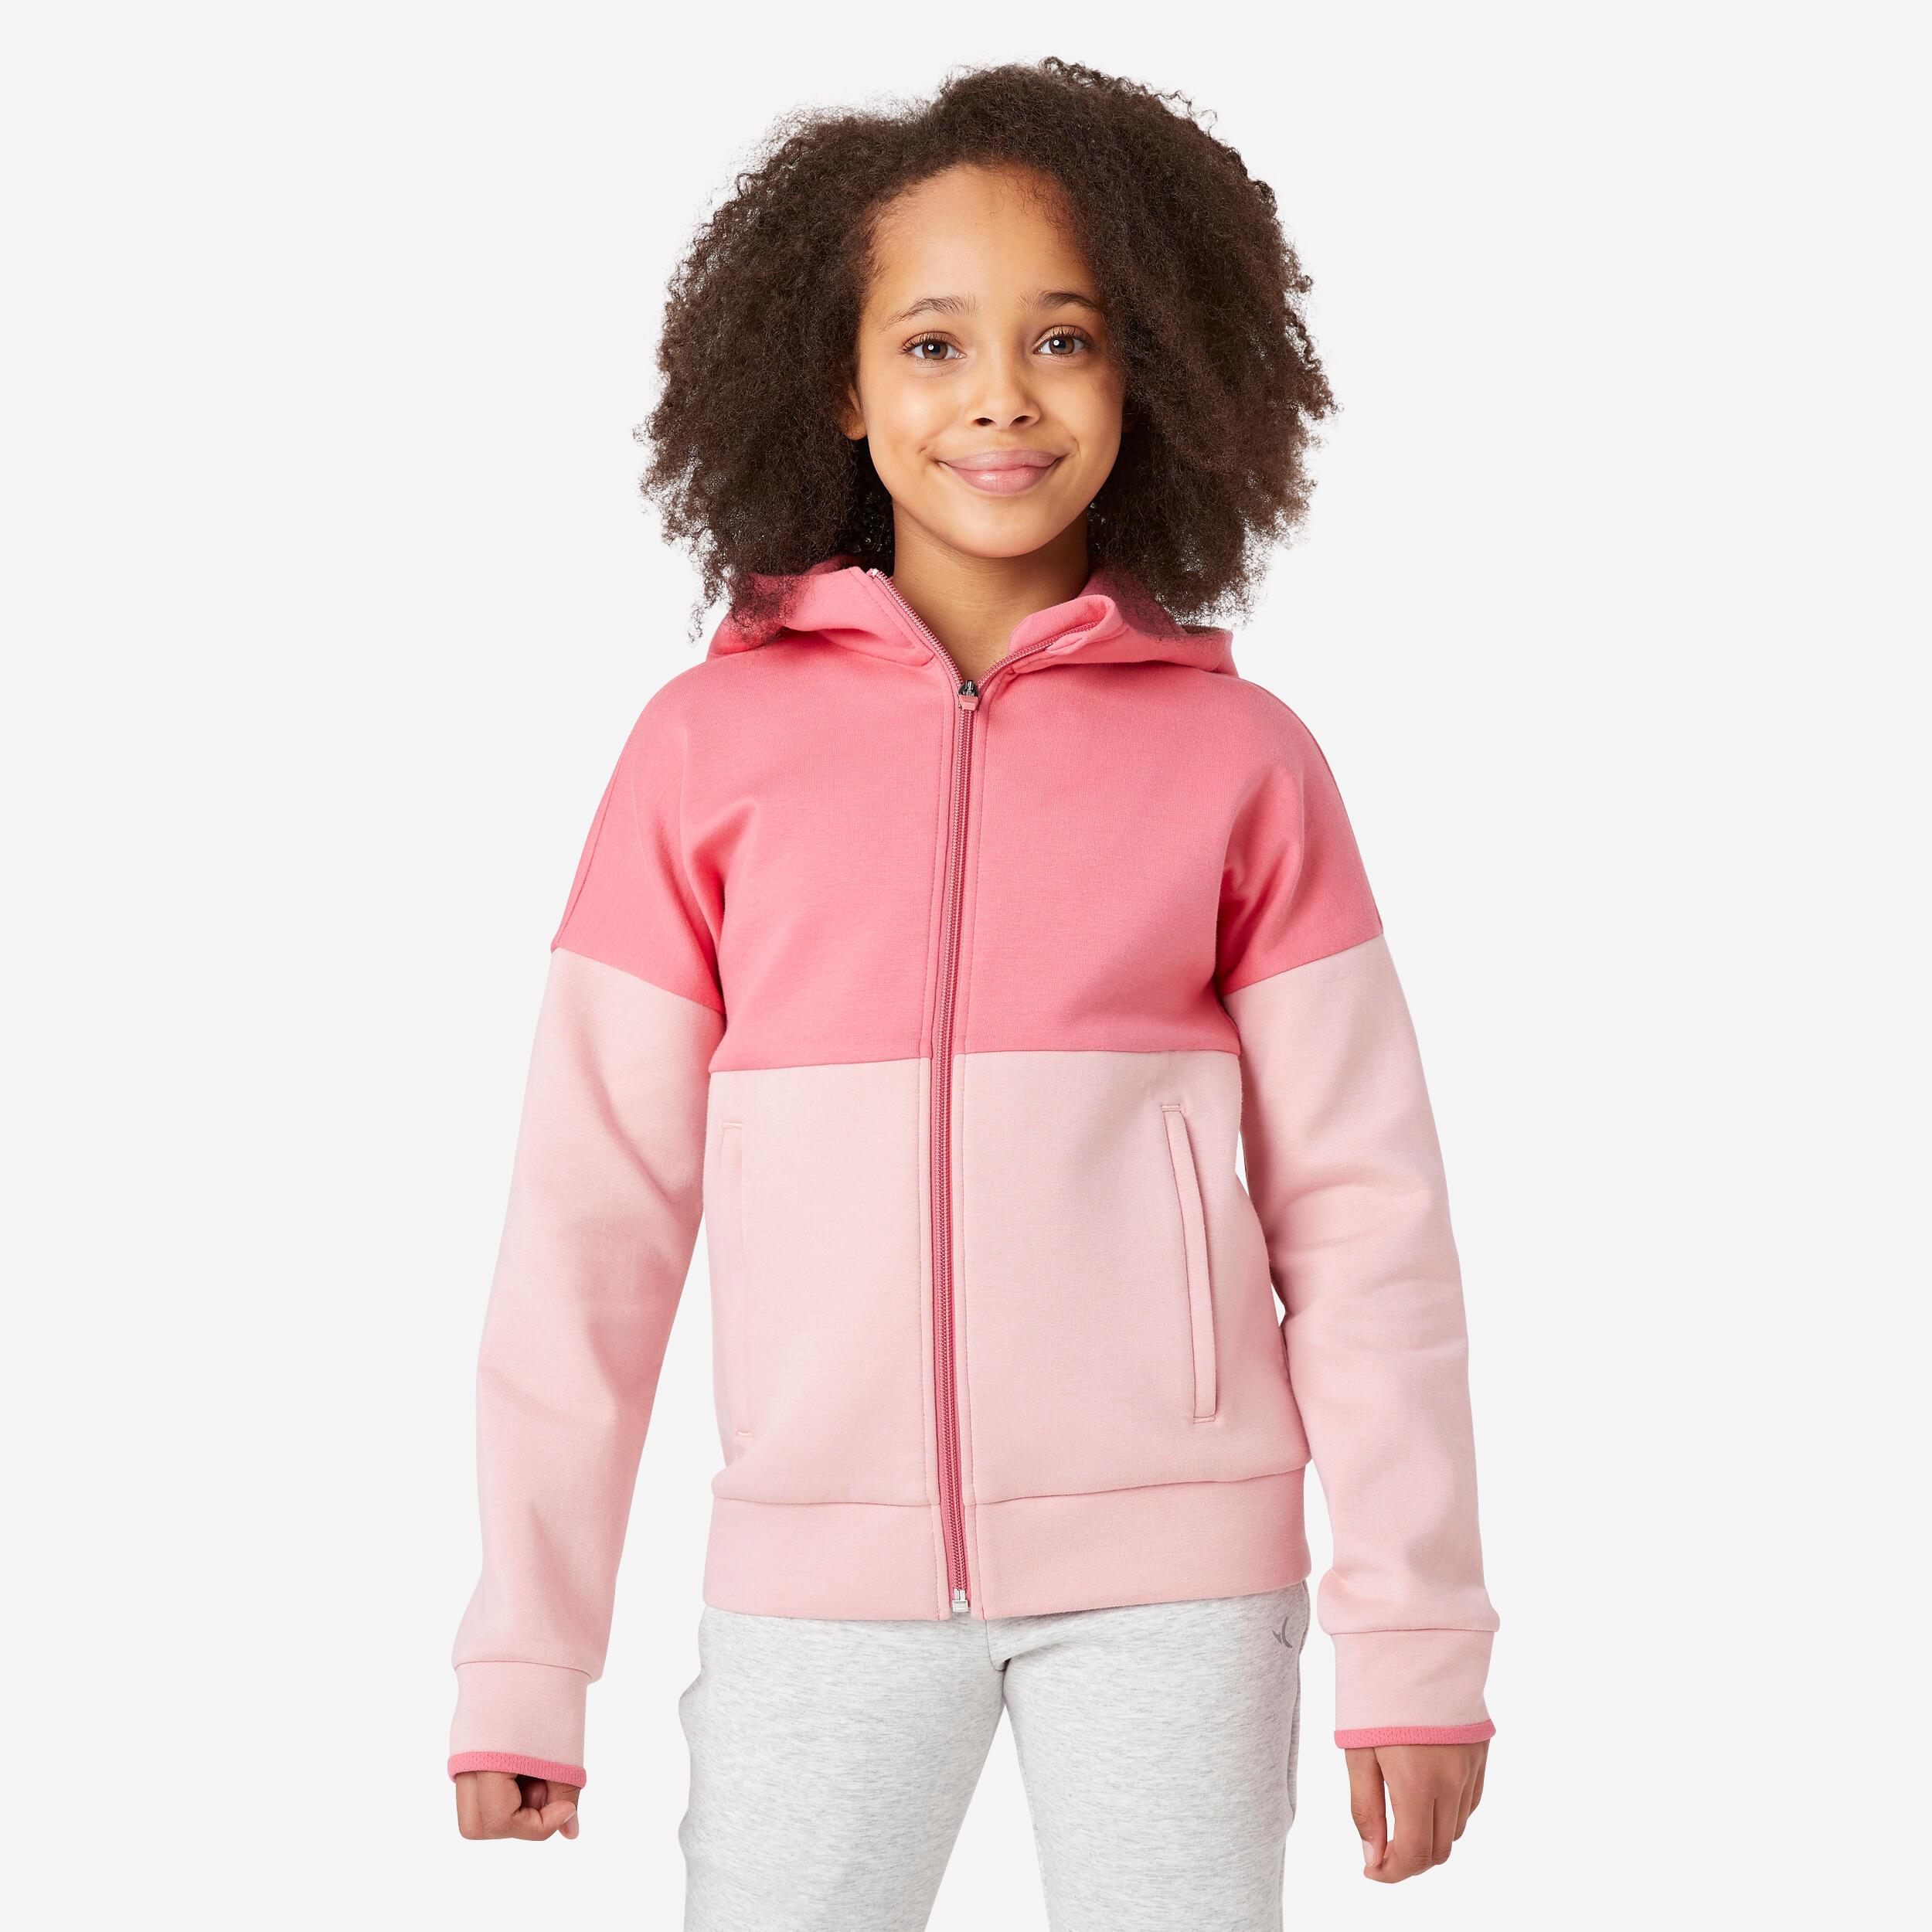 Kids' Breathable Zip-Up Cotton Hoodie 900 - Pink 1/6